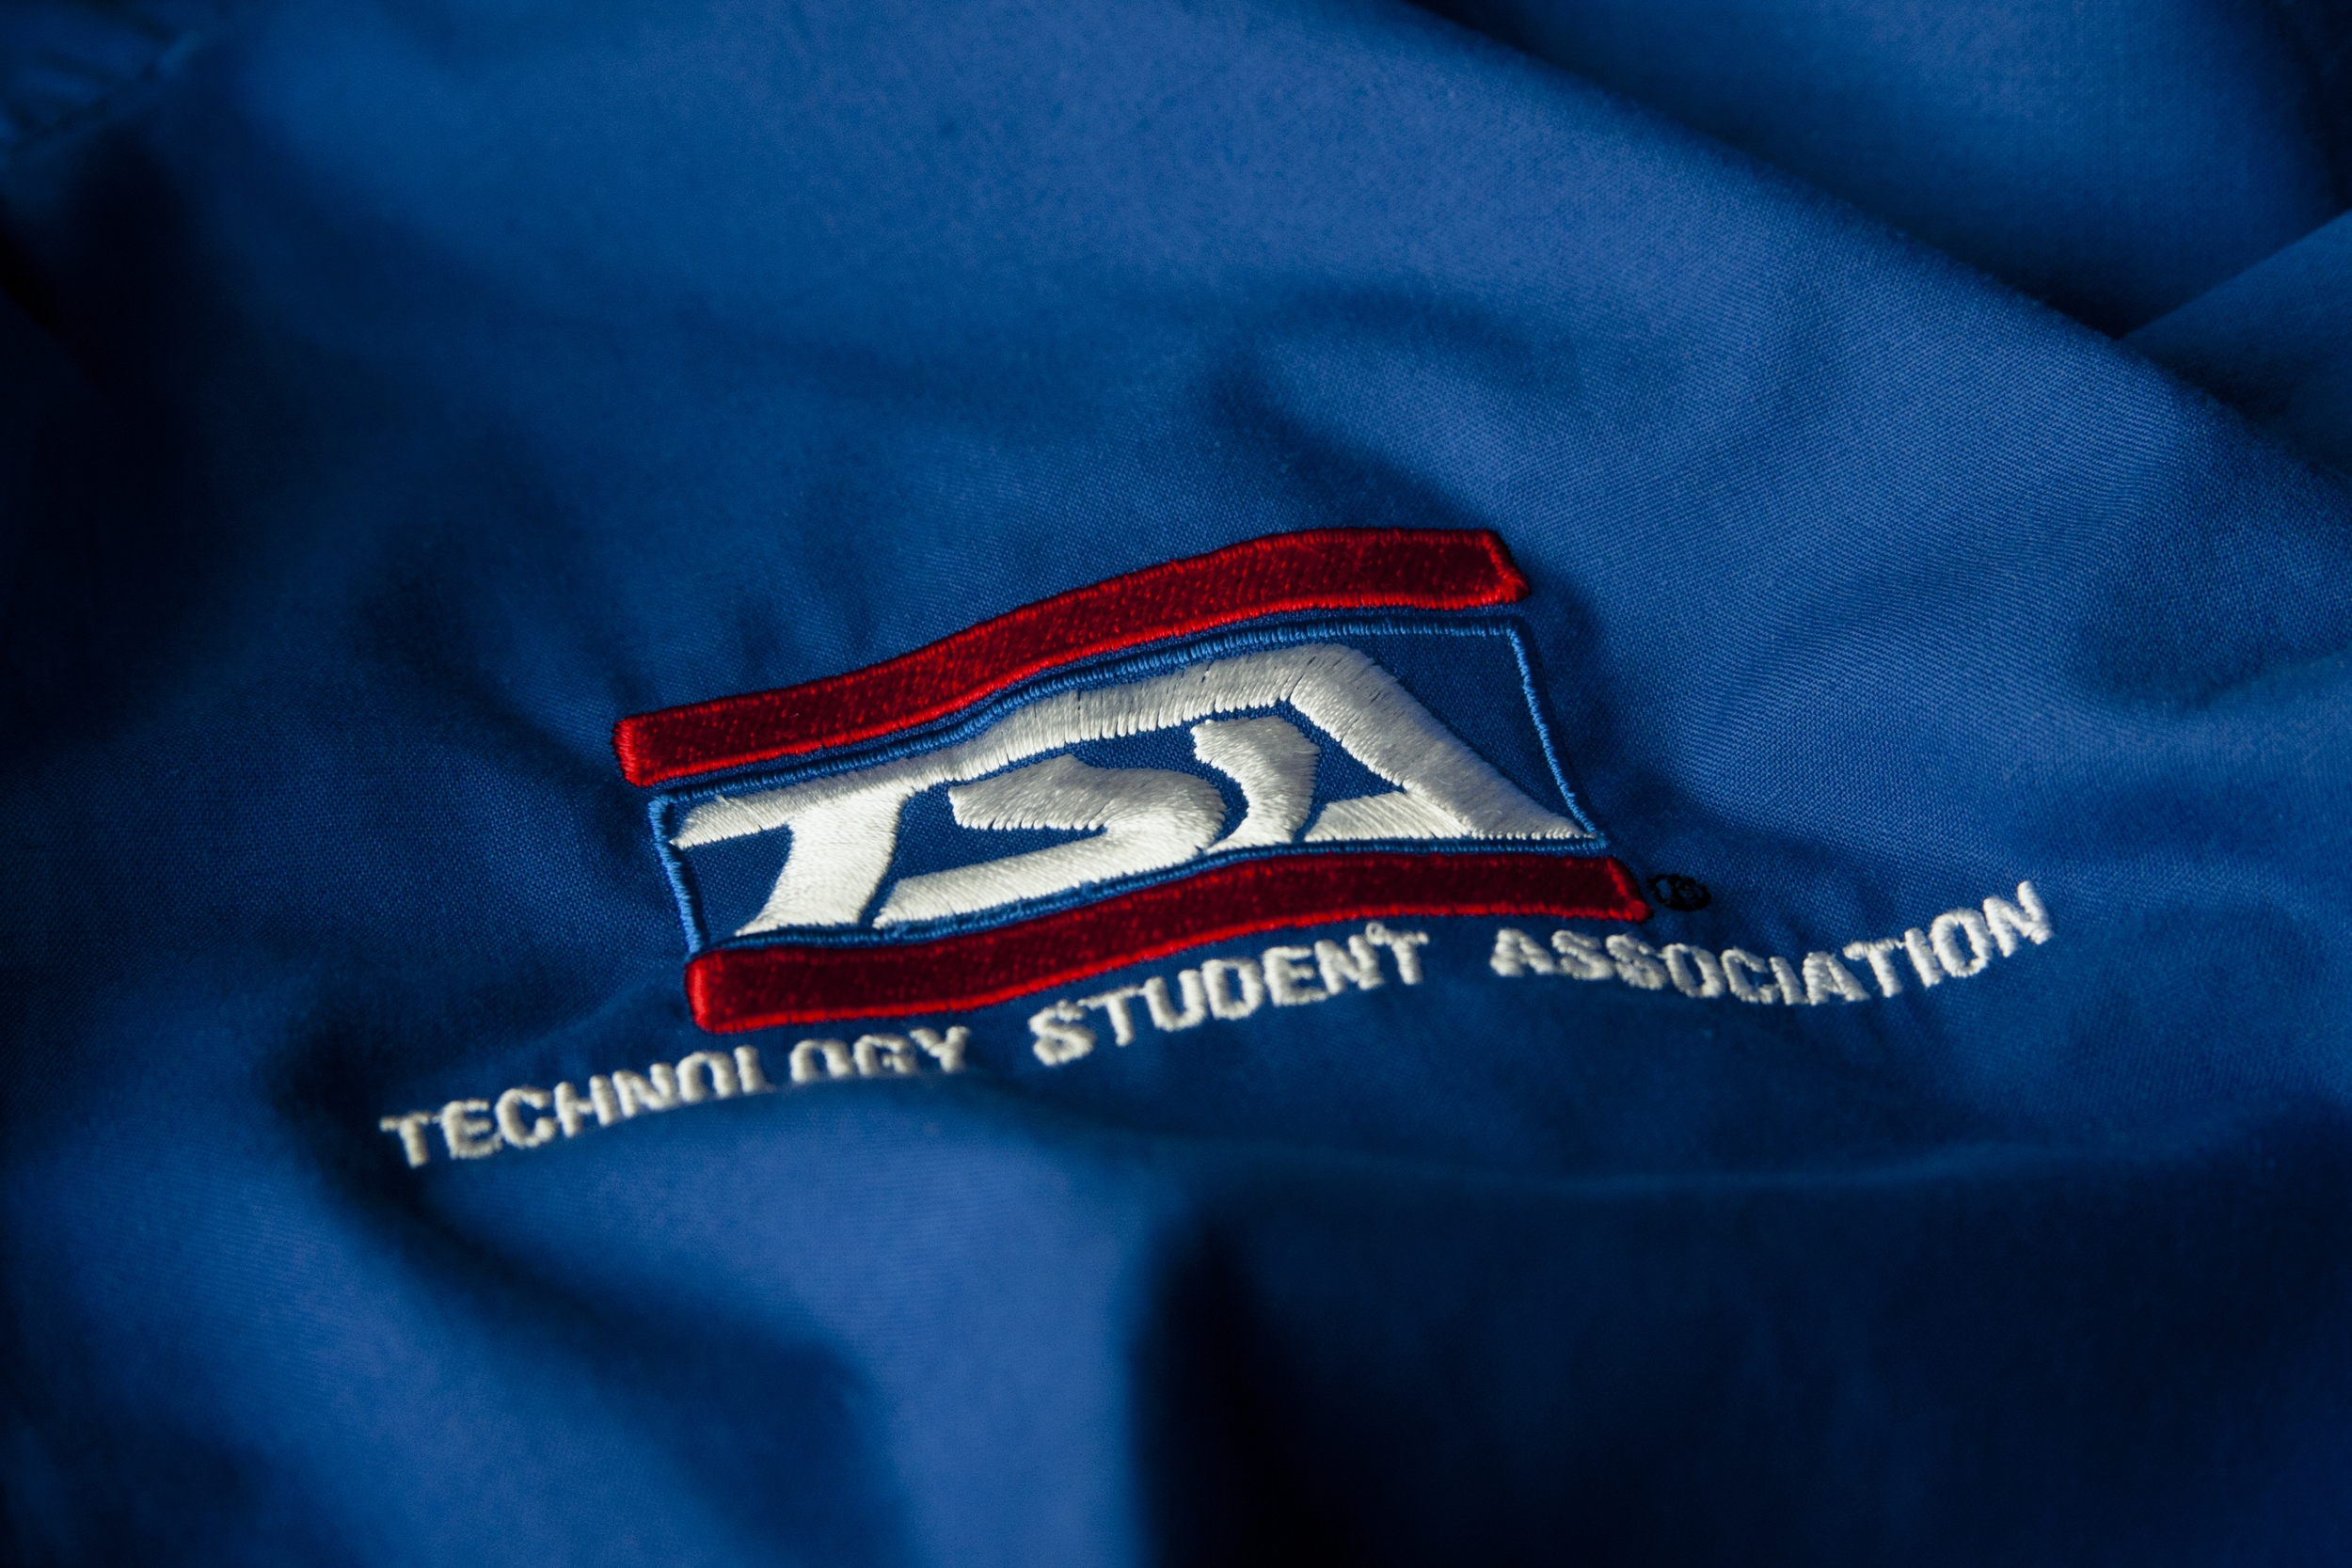 Blue jacket with TSA logo, close-up view.